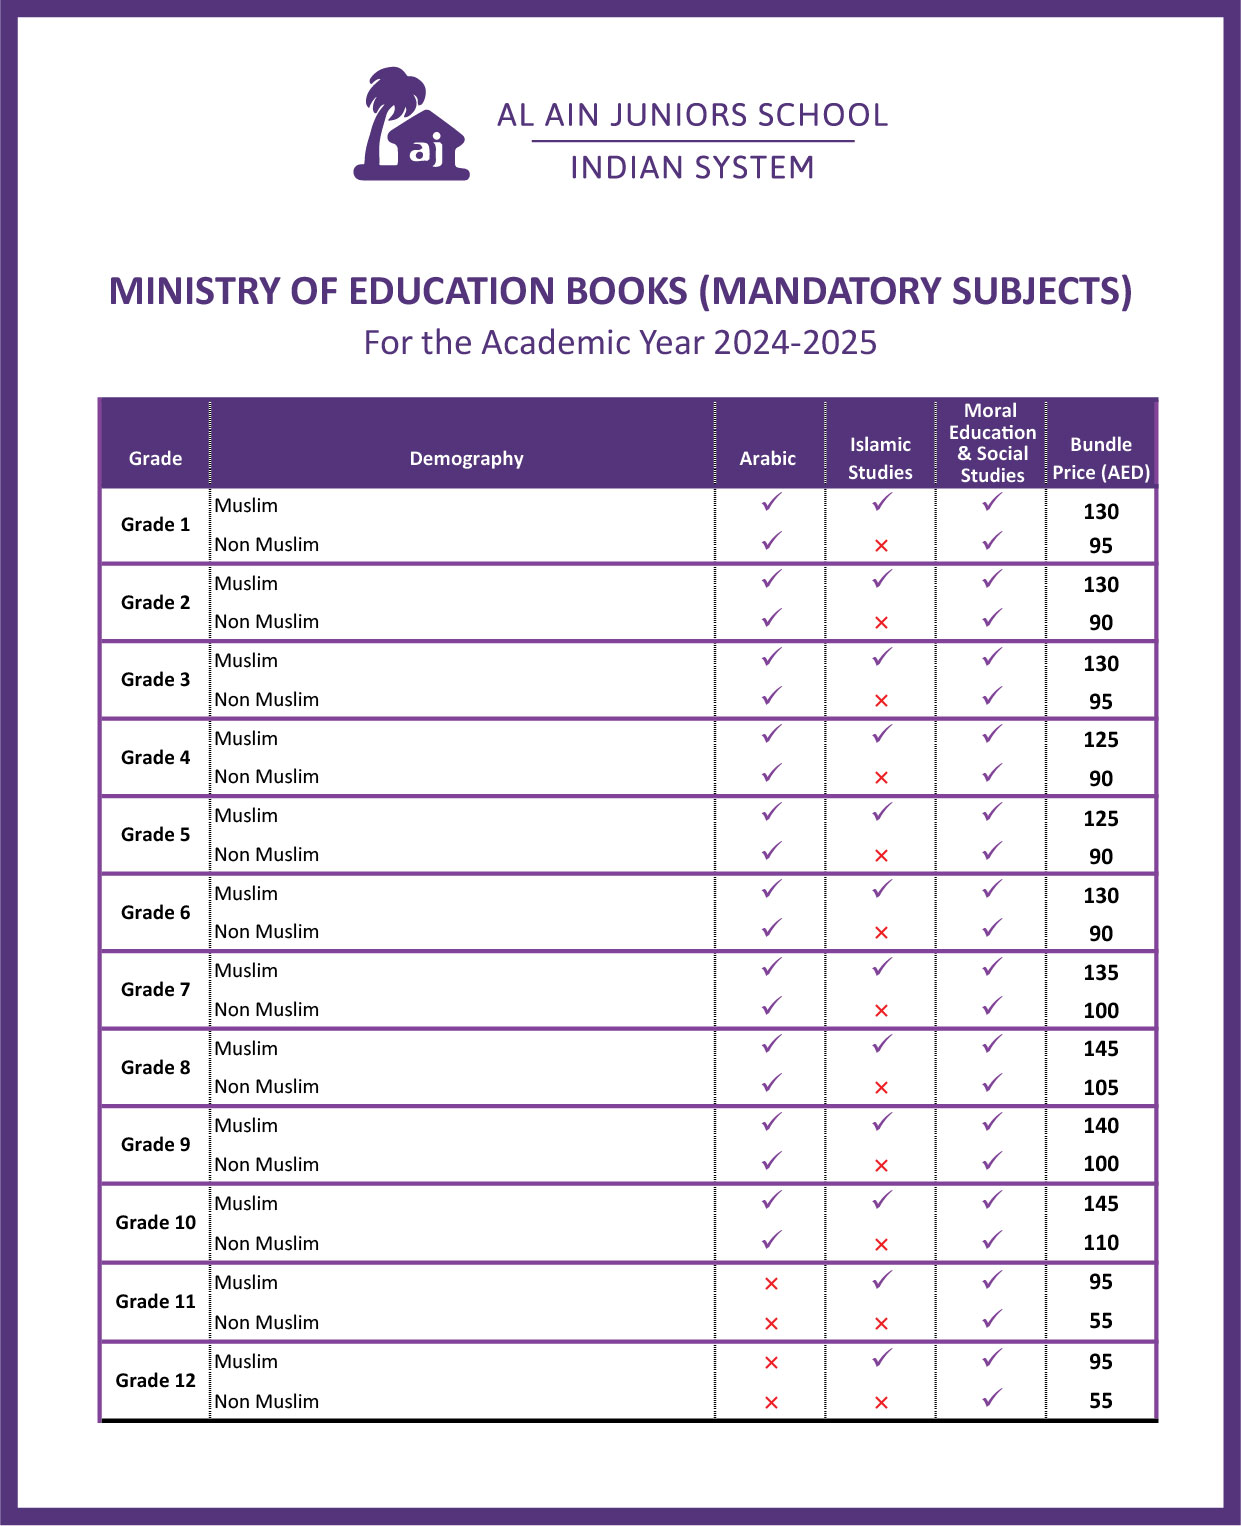 AJI Ministry of Education Books Mandatory Subjects 2024 2025 01